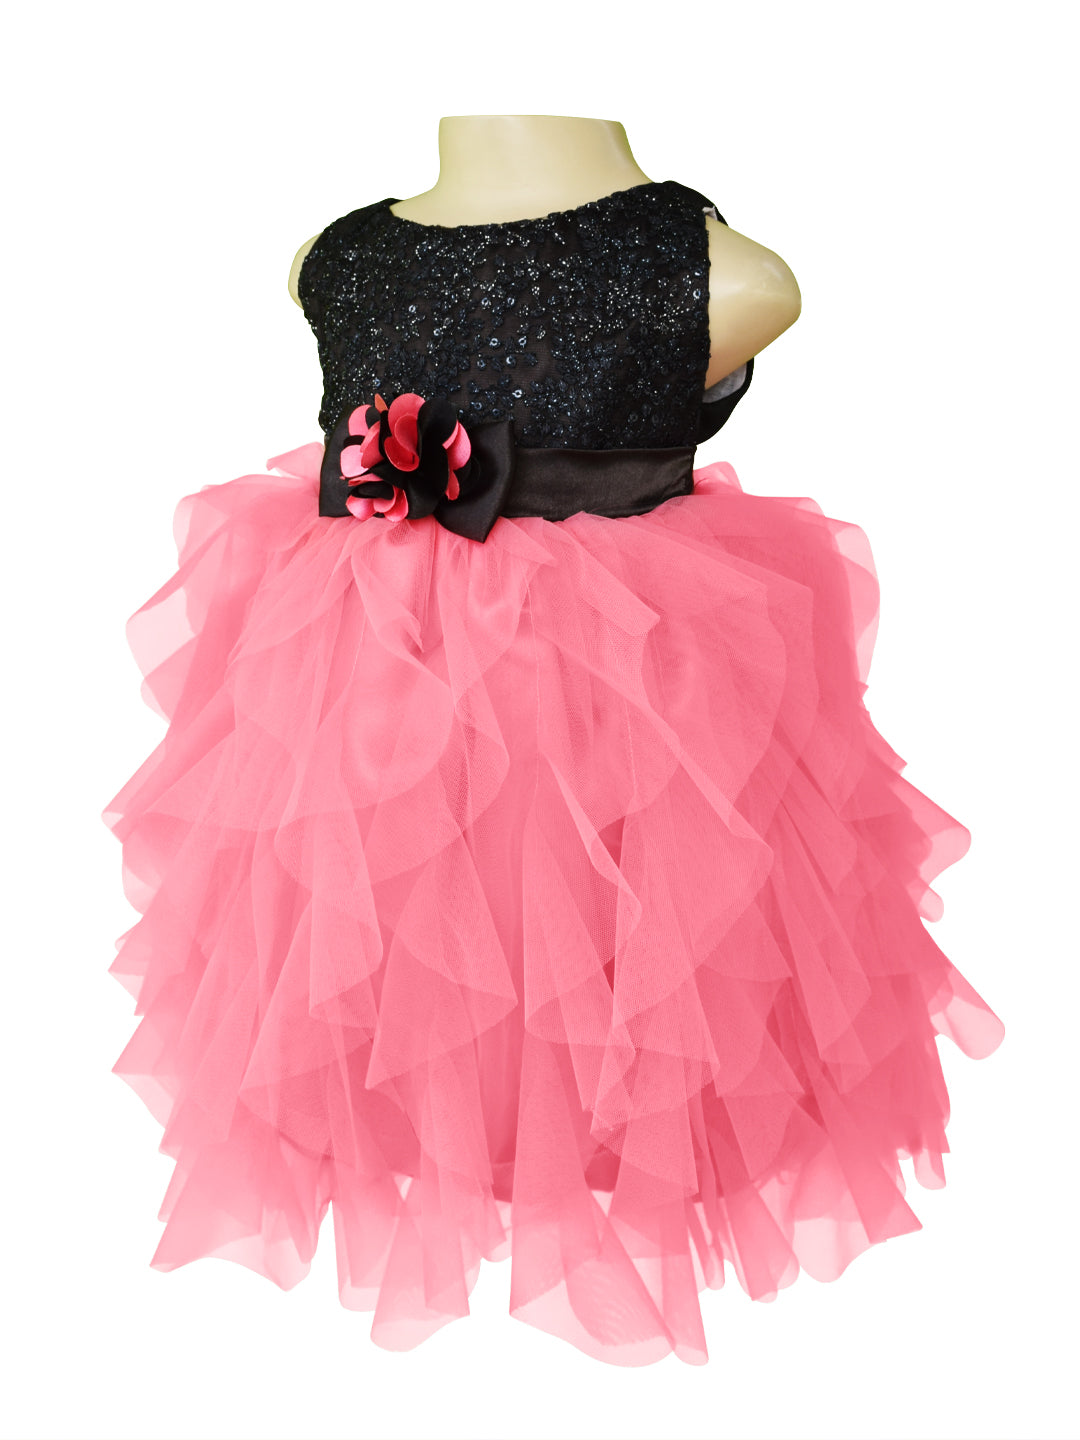 Kids Party Dress | Faye Black Lace Waterfall Dress